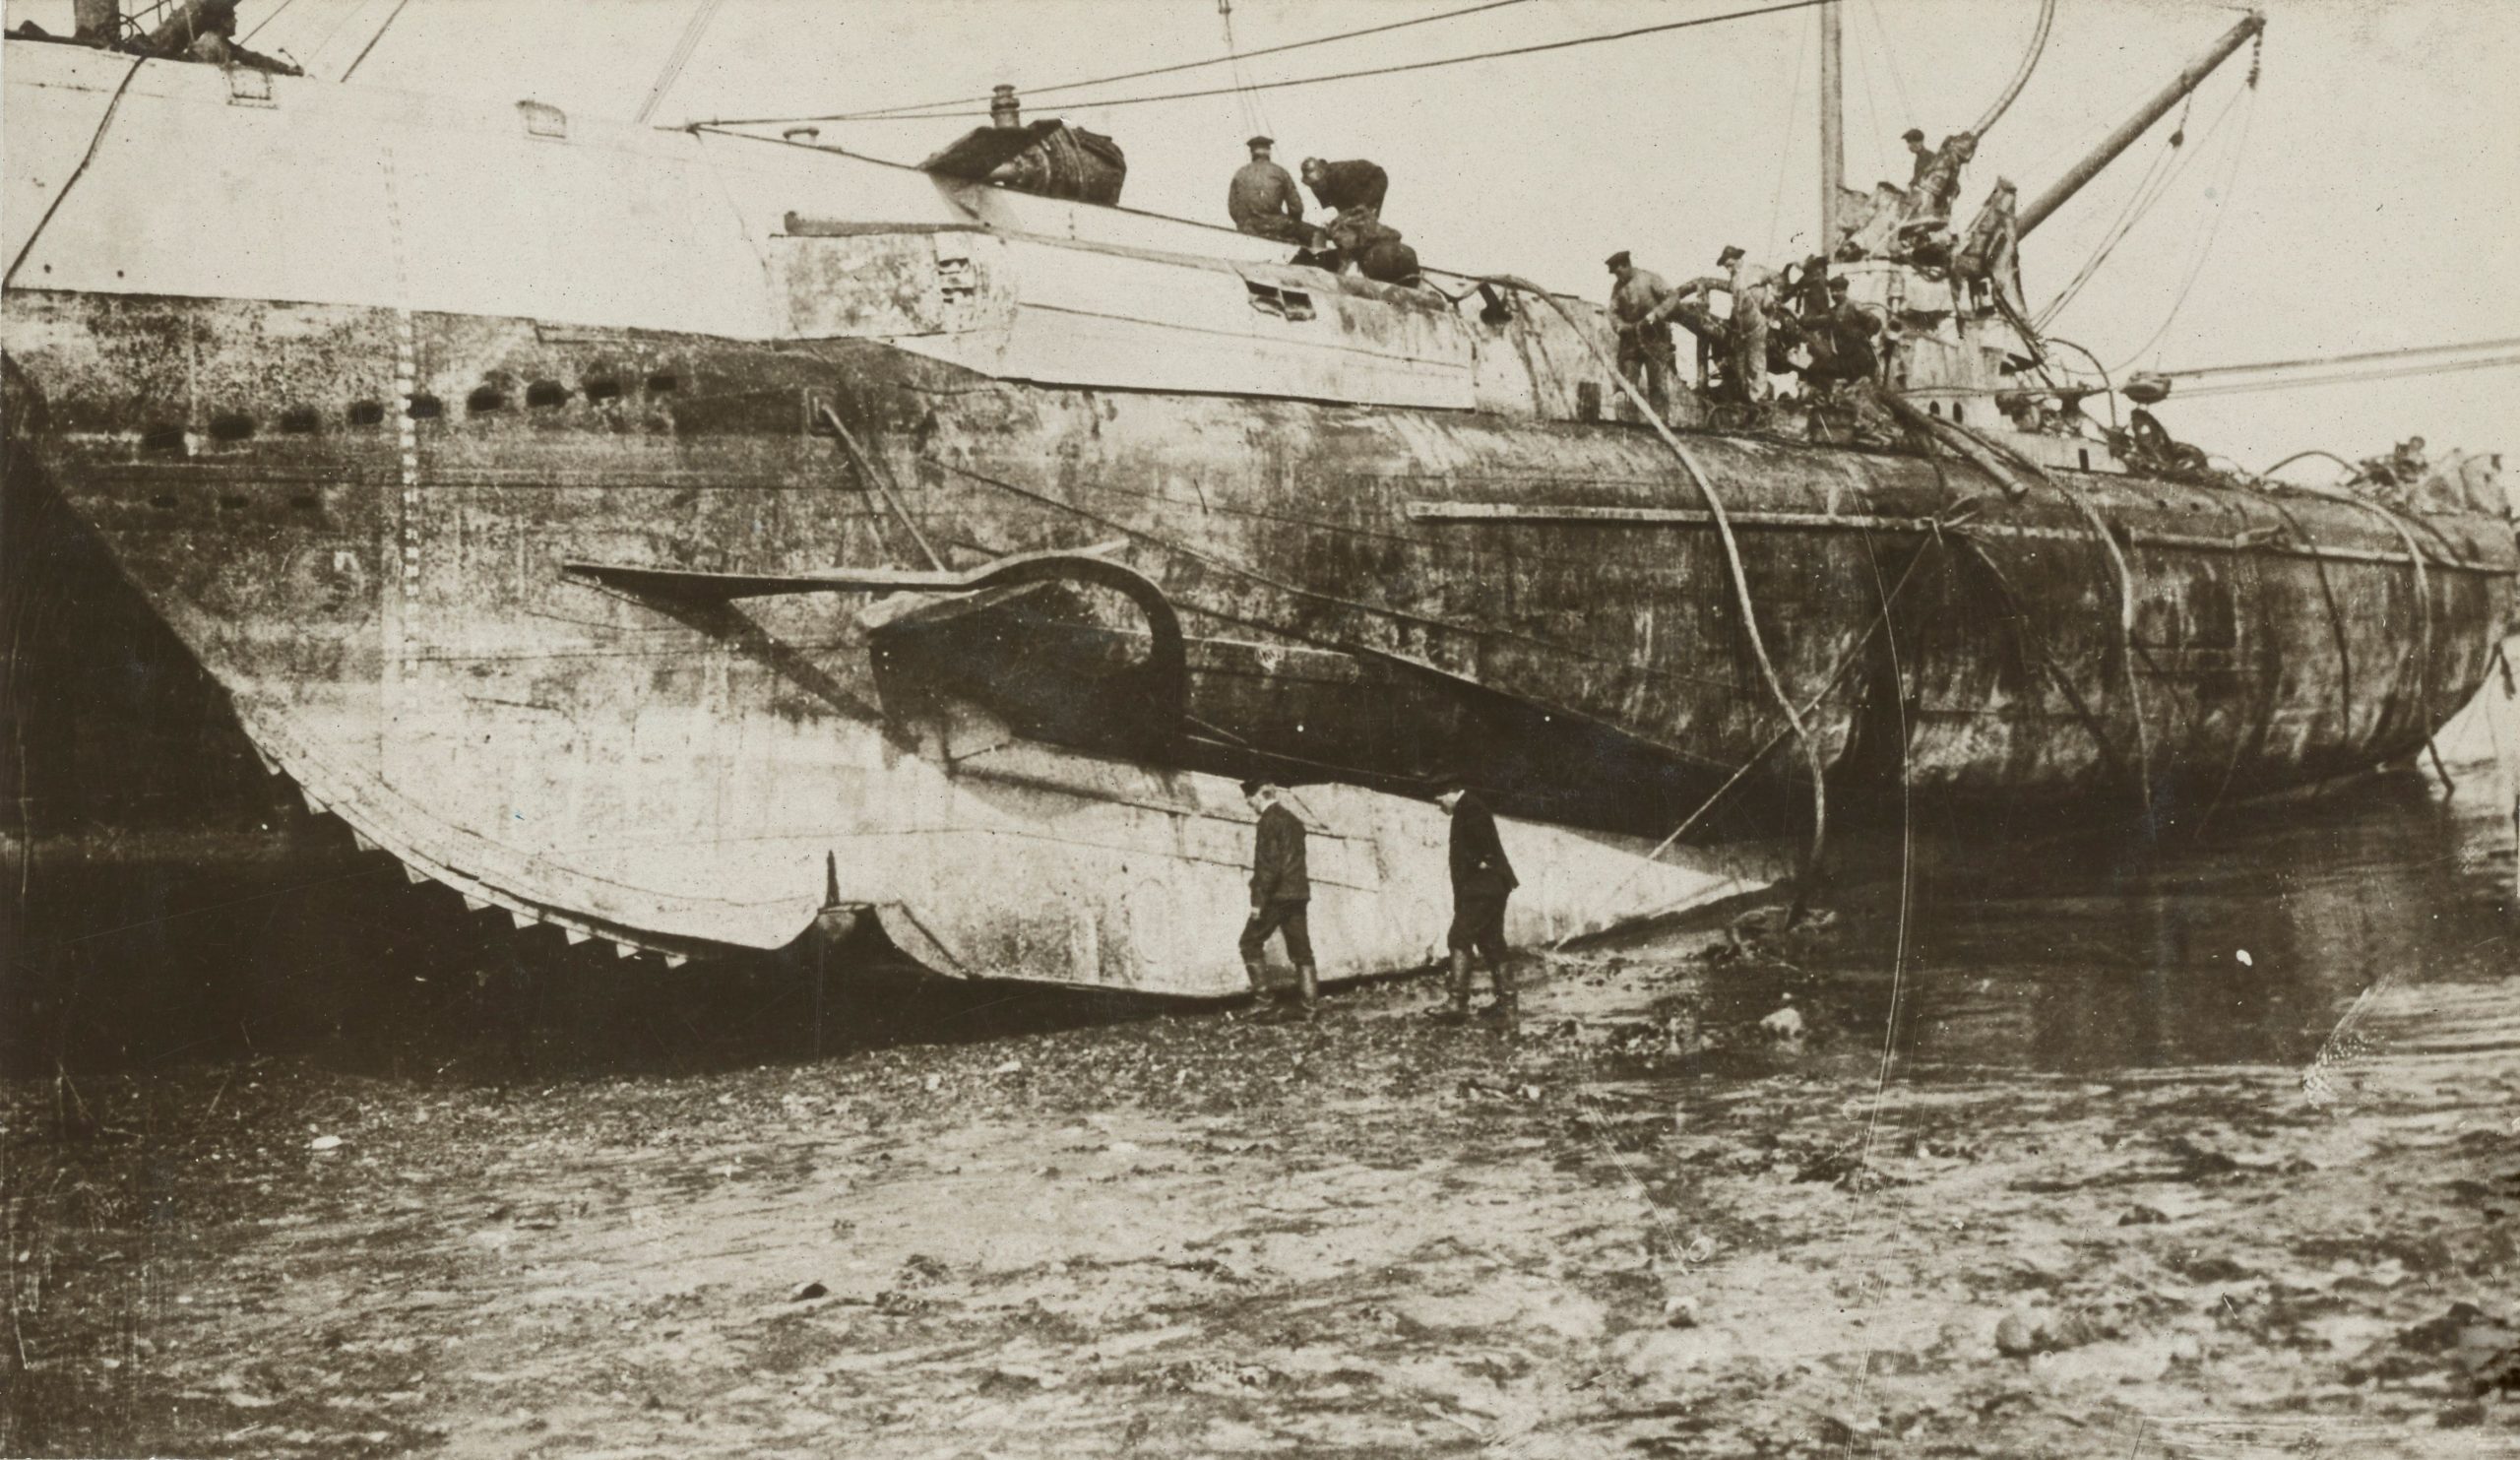 German U-boat surveyed more than 100 years after wartime sinking